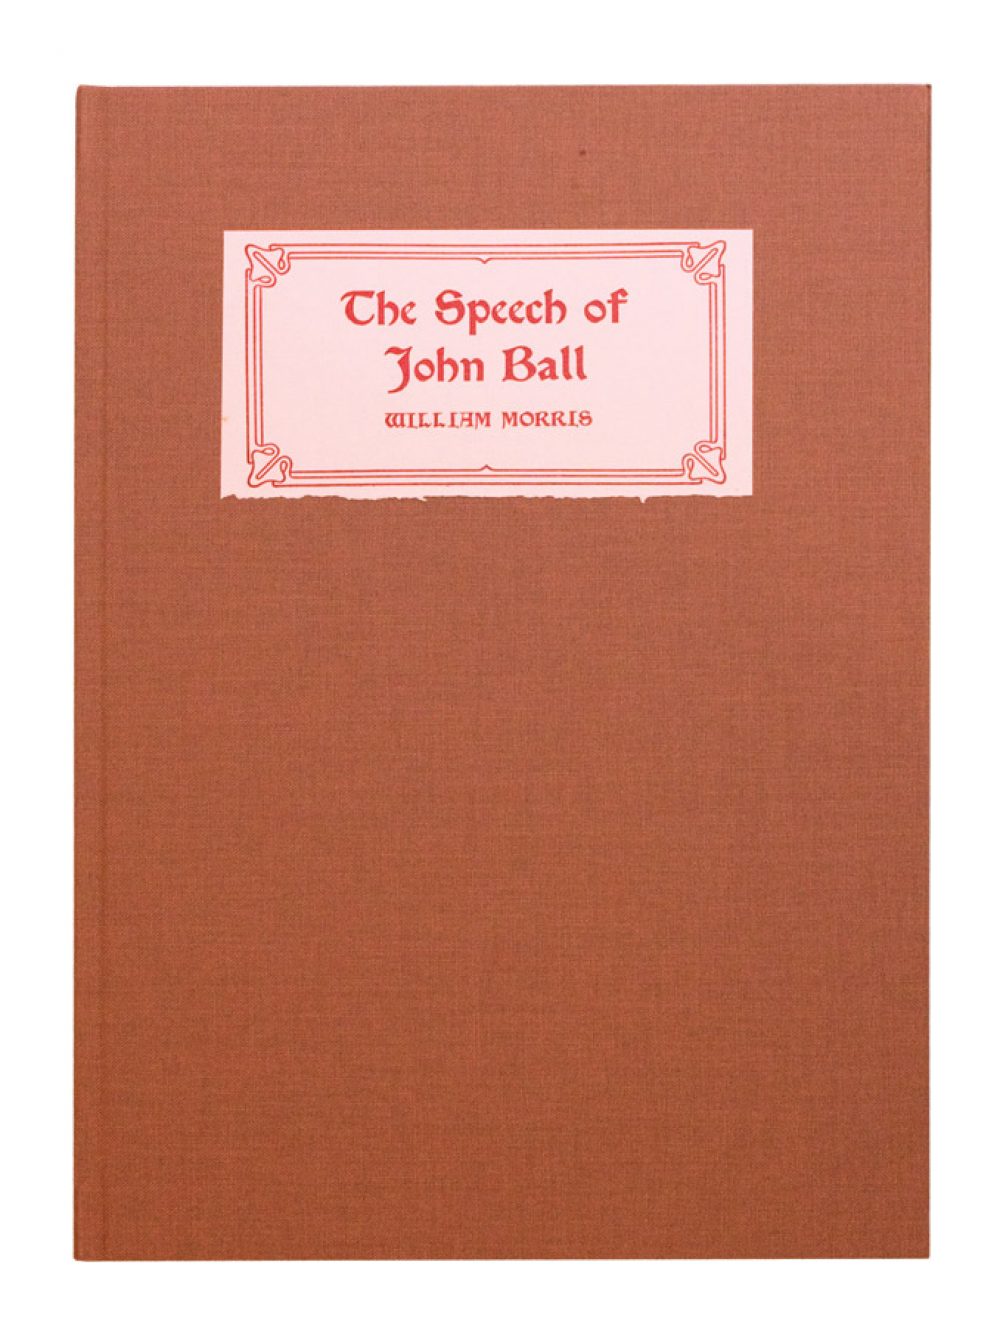 The Speech of John Ball by William Morris